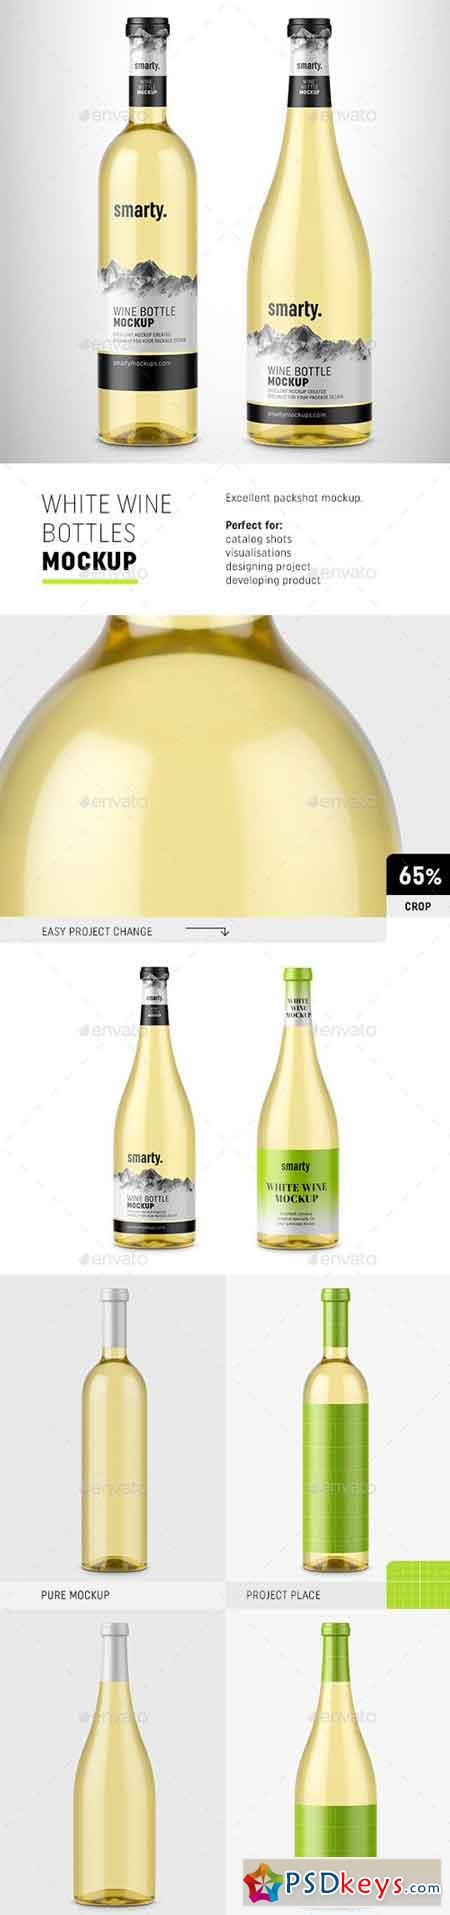 Download White Wine Bottles Mockup 20263664 » Free Download Photoshop Vector Stock image Via Torrent ...